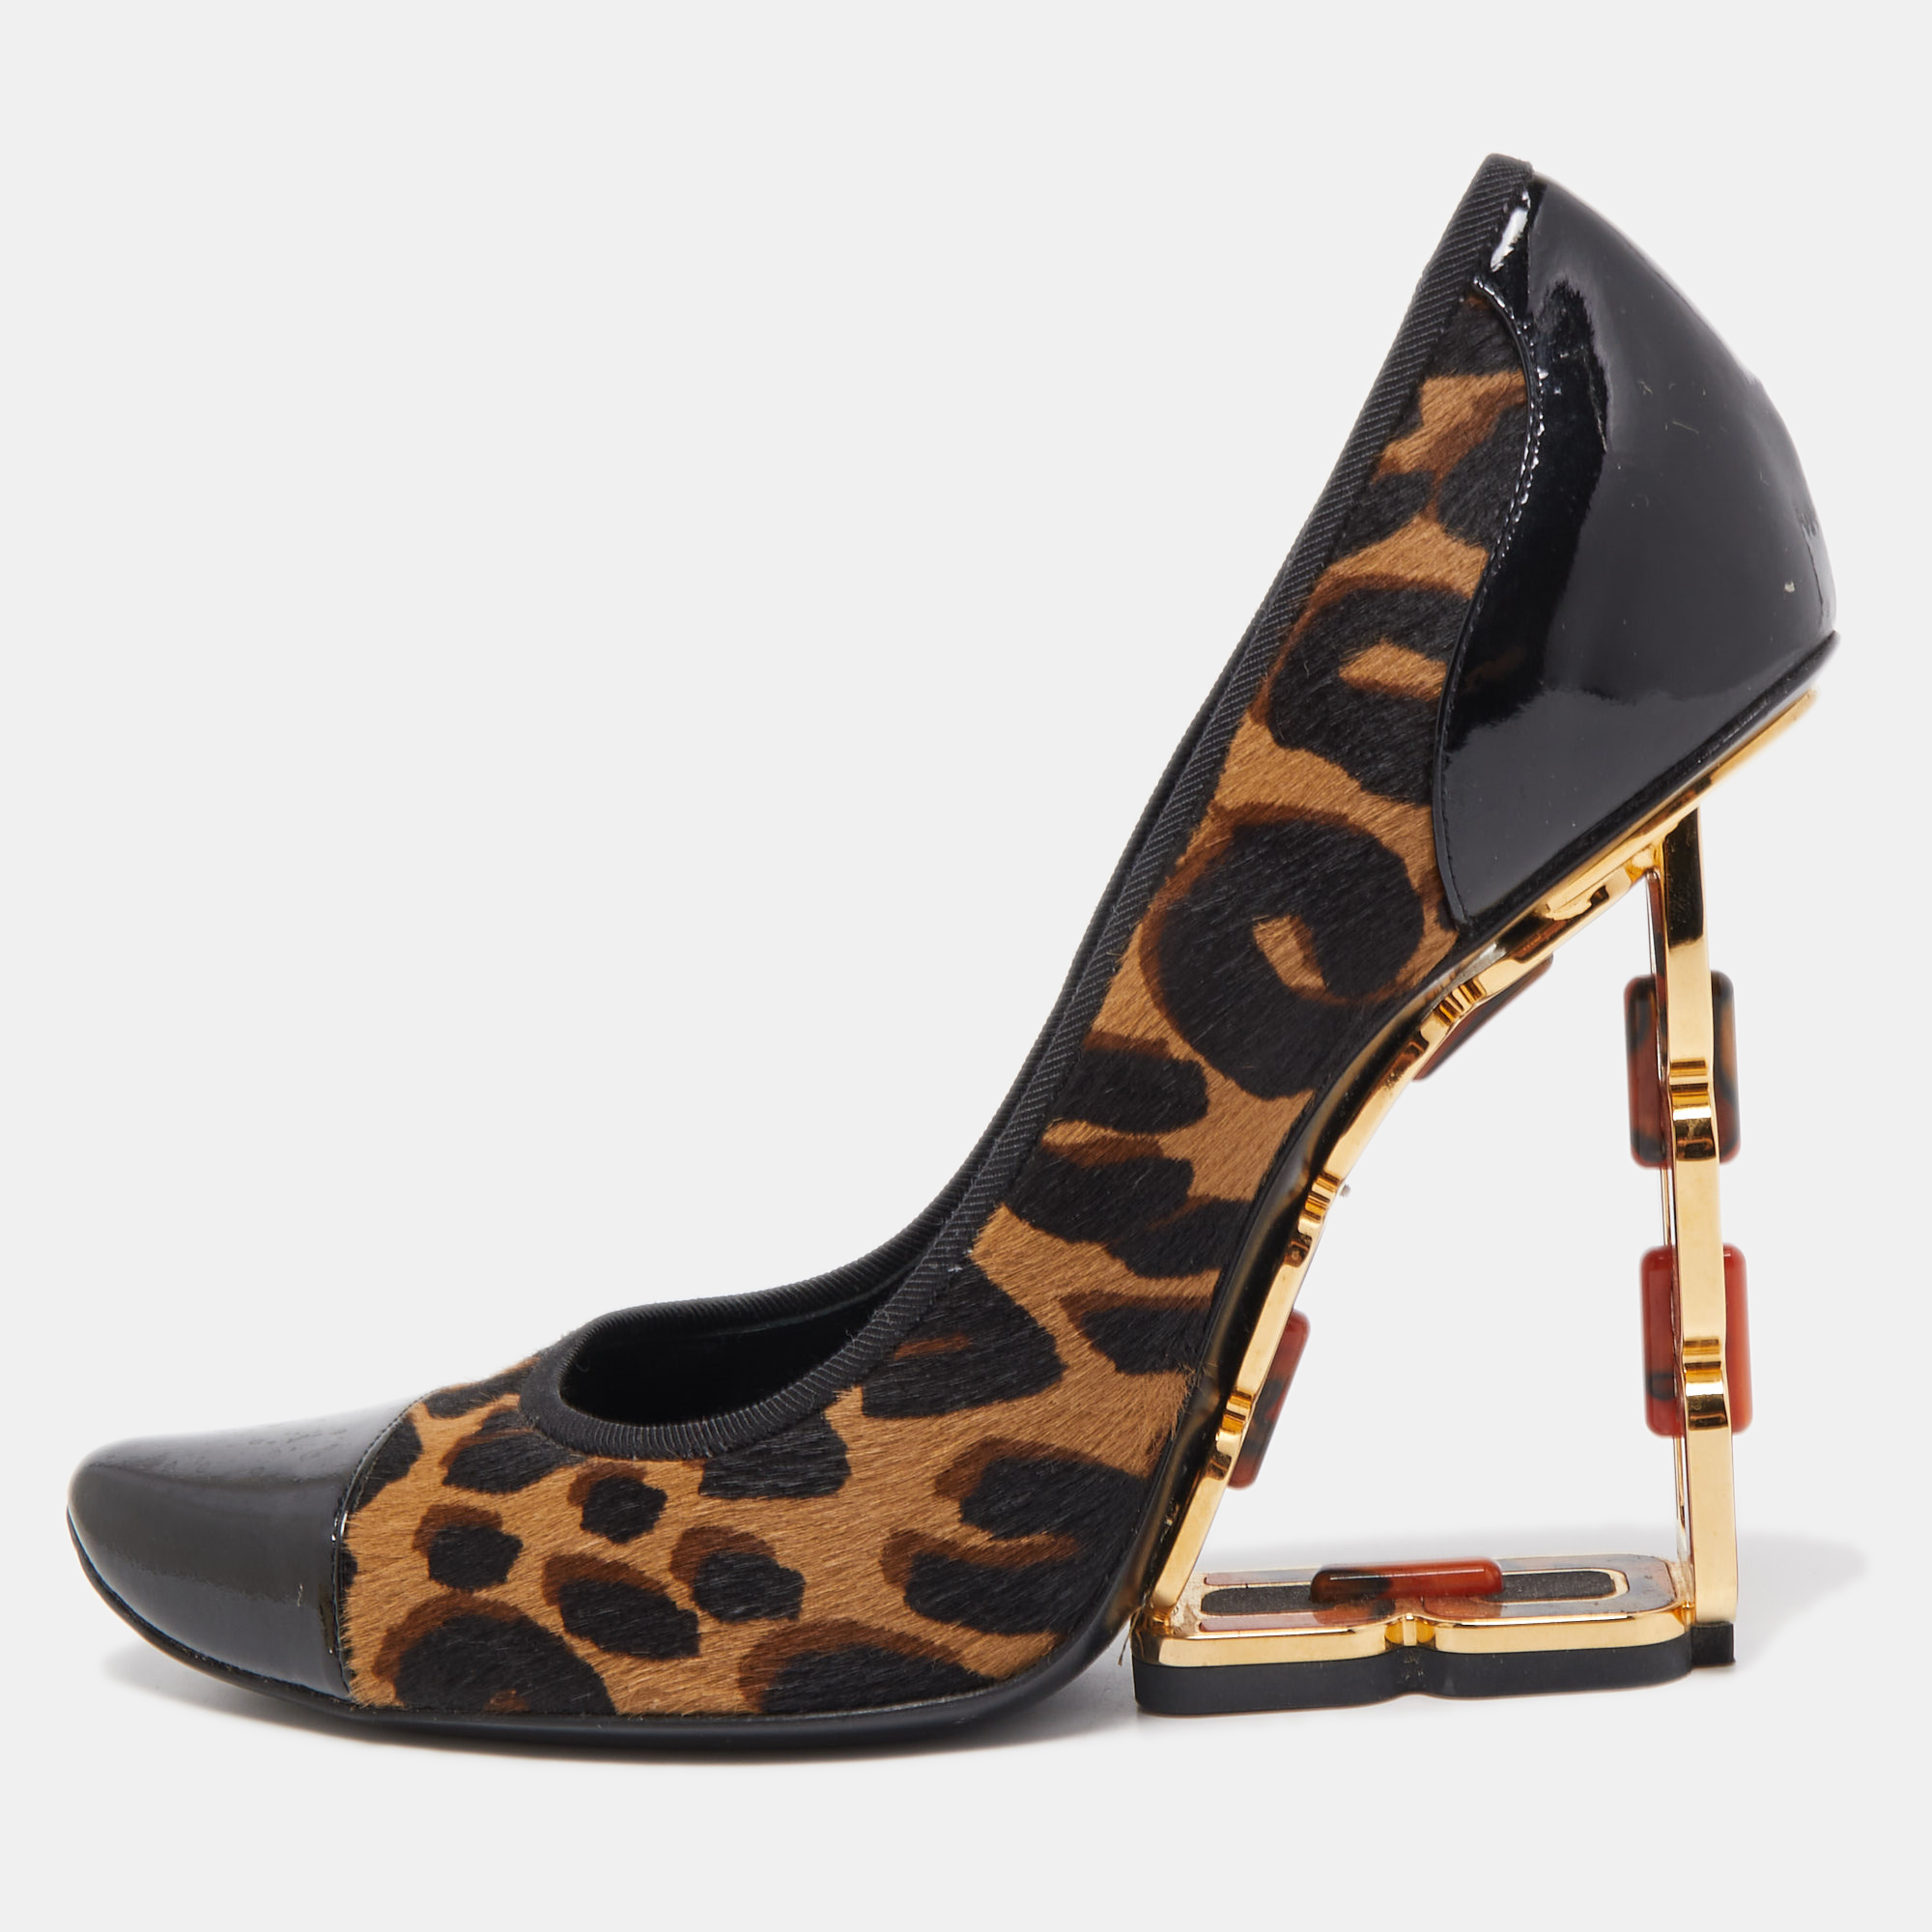 Louis vuitton tricolor leopard print calf hair and patent leather wedge pumps size 39